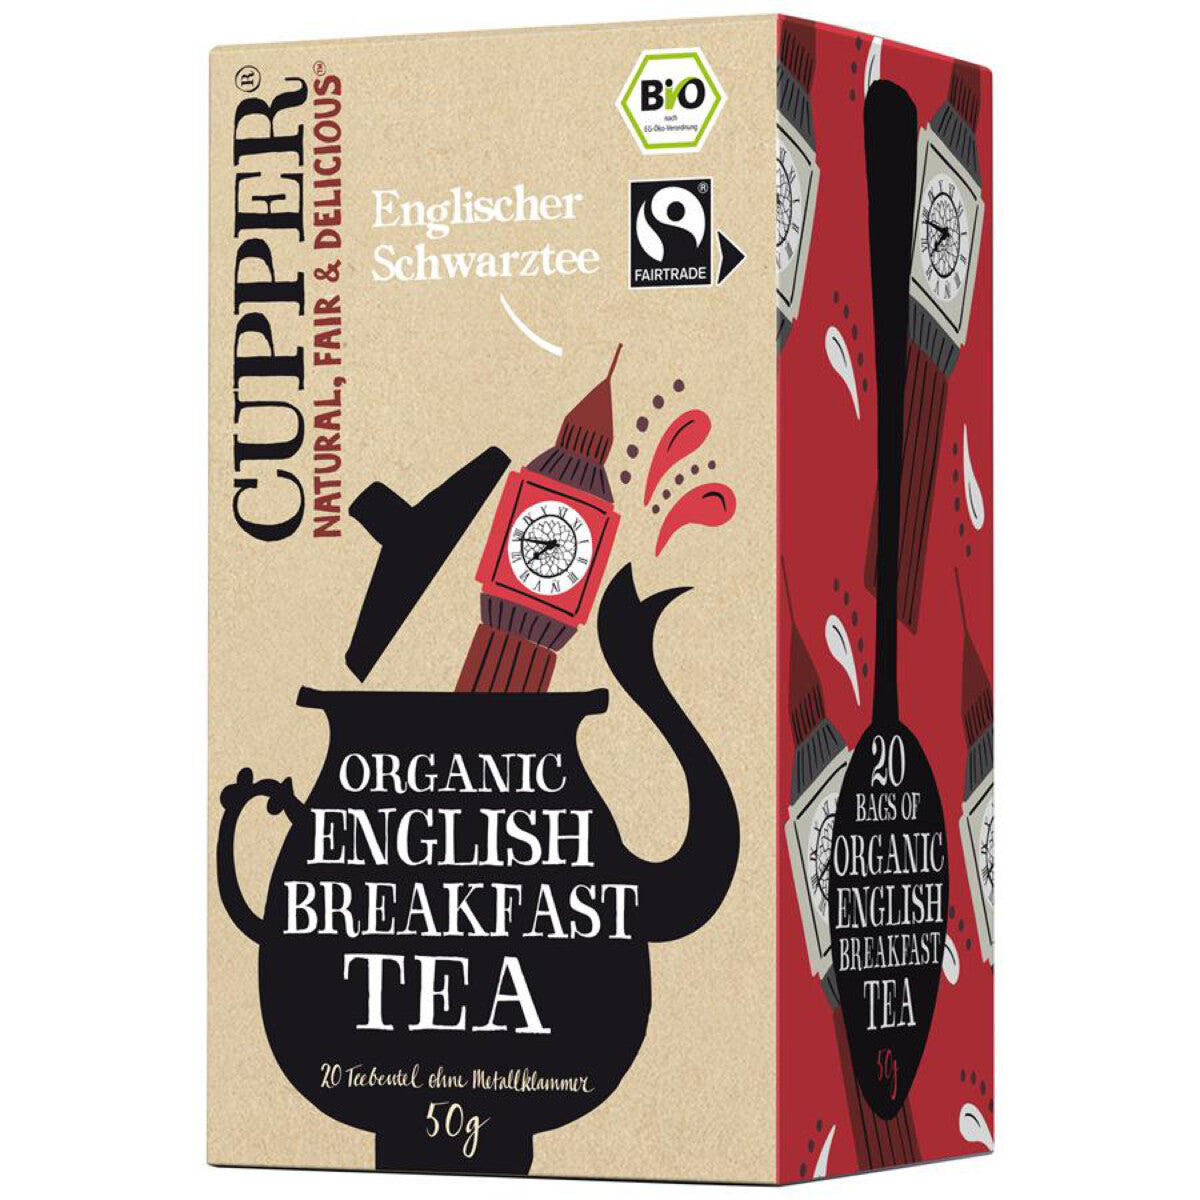 CUPPER English Breakfast Tea - 20 Btl.